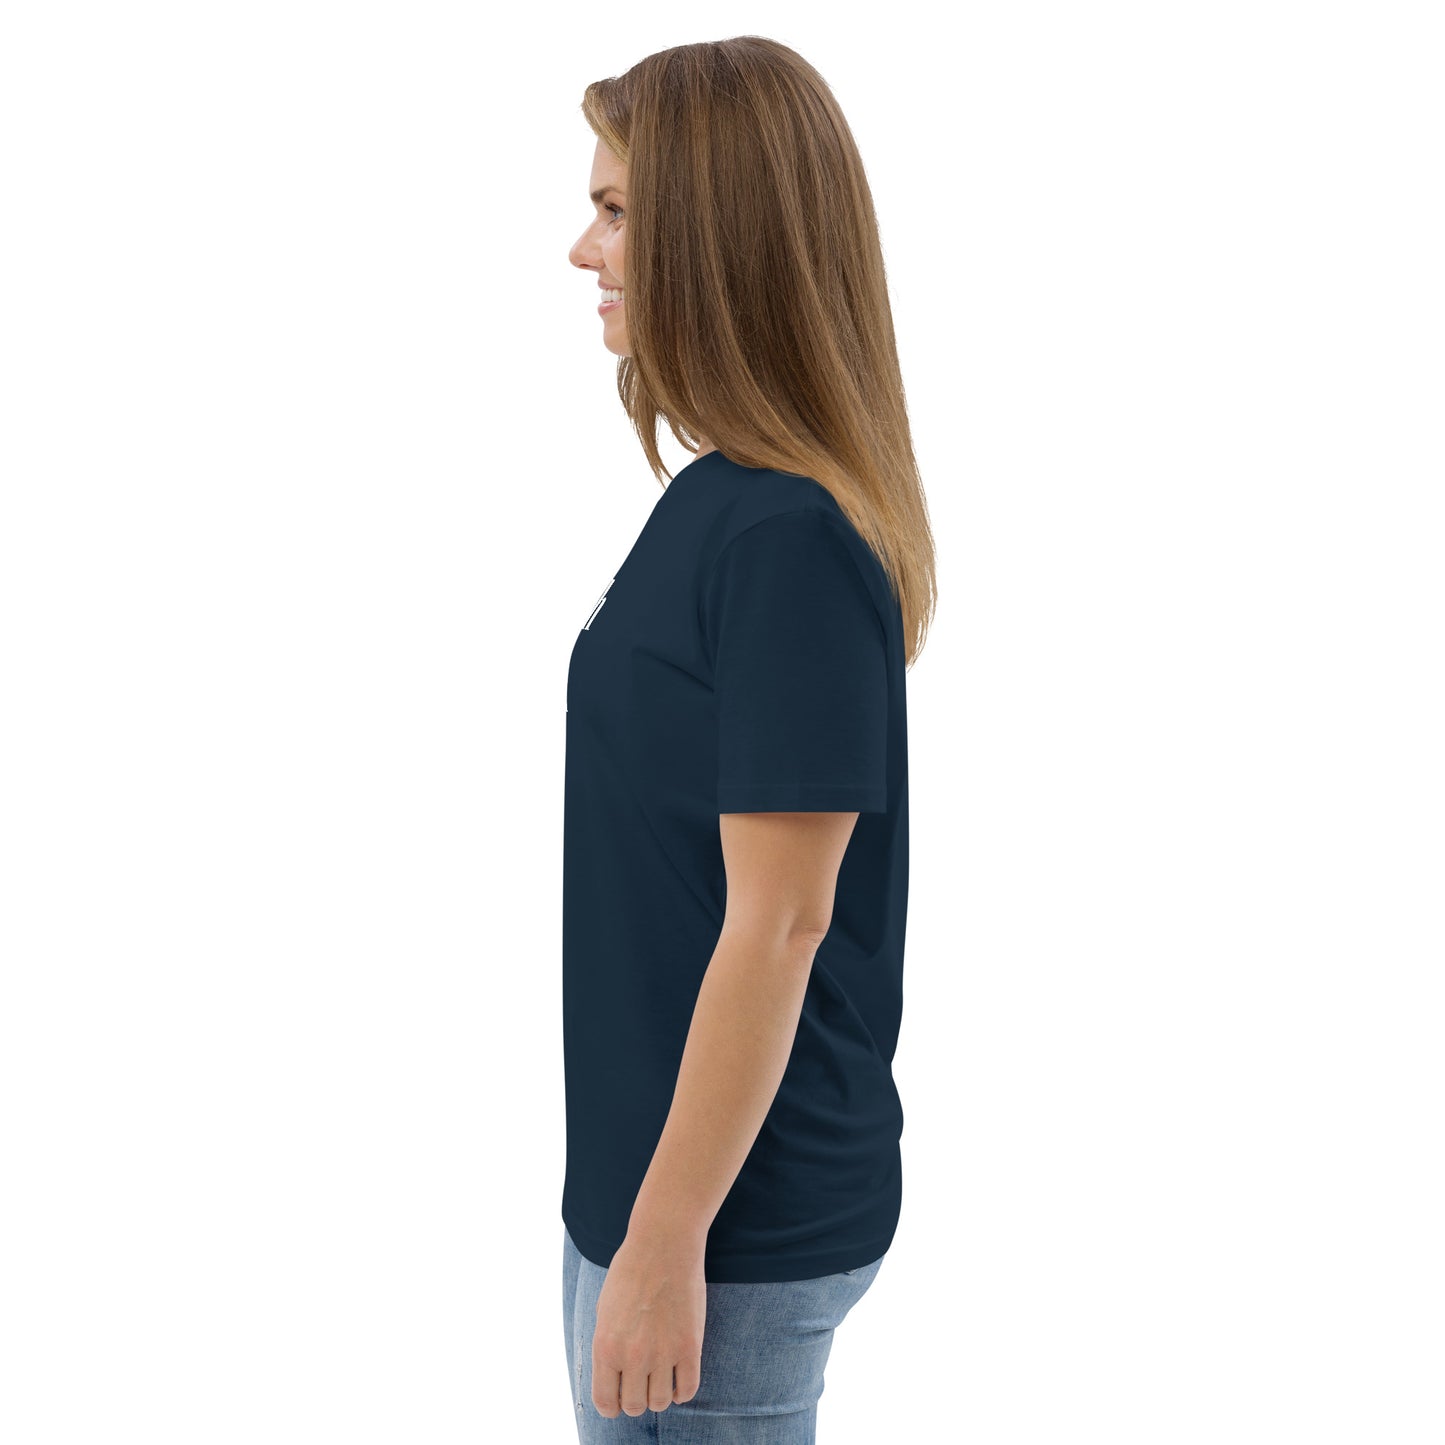 Camiseta unisex de algodón orgánico Edtech